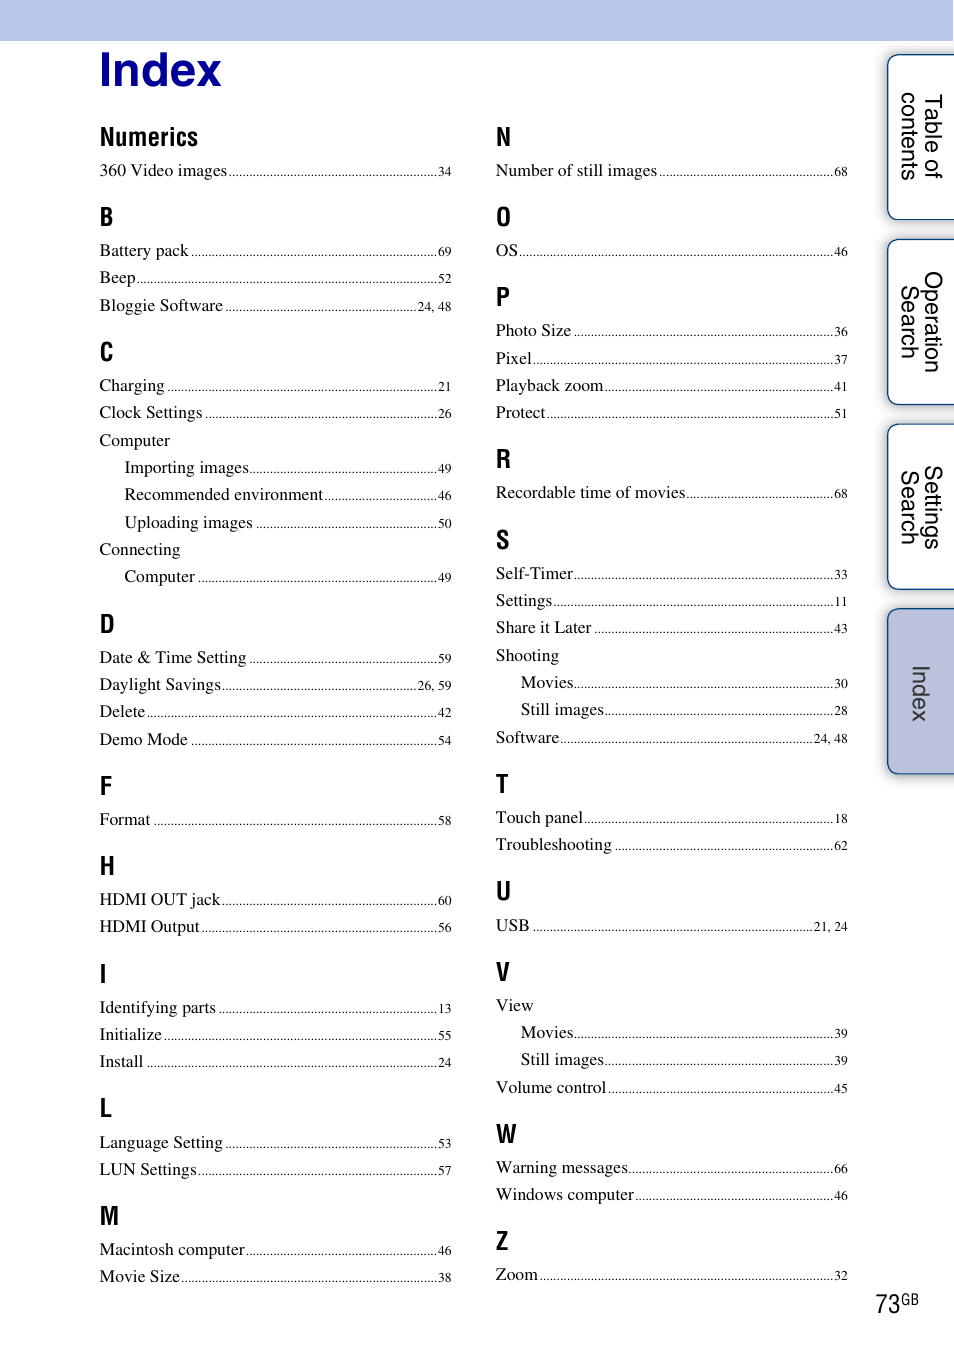 Index, Numerics | Sony bloggie MHS-TS20К User Manual | Page 73 / 73